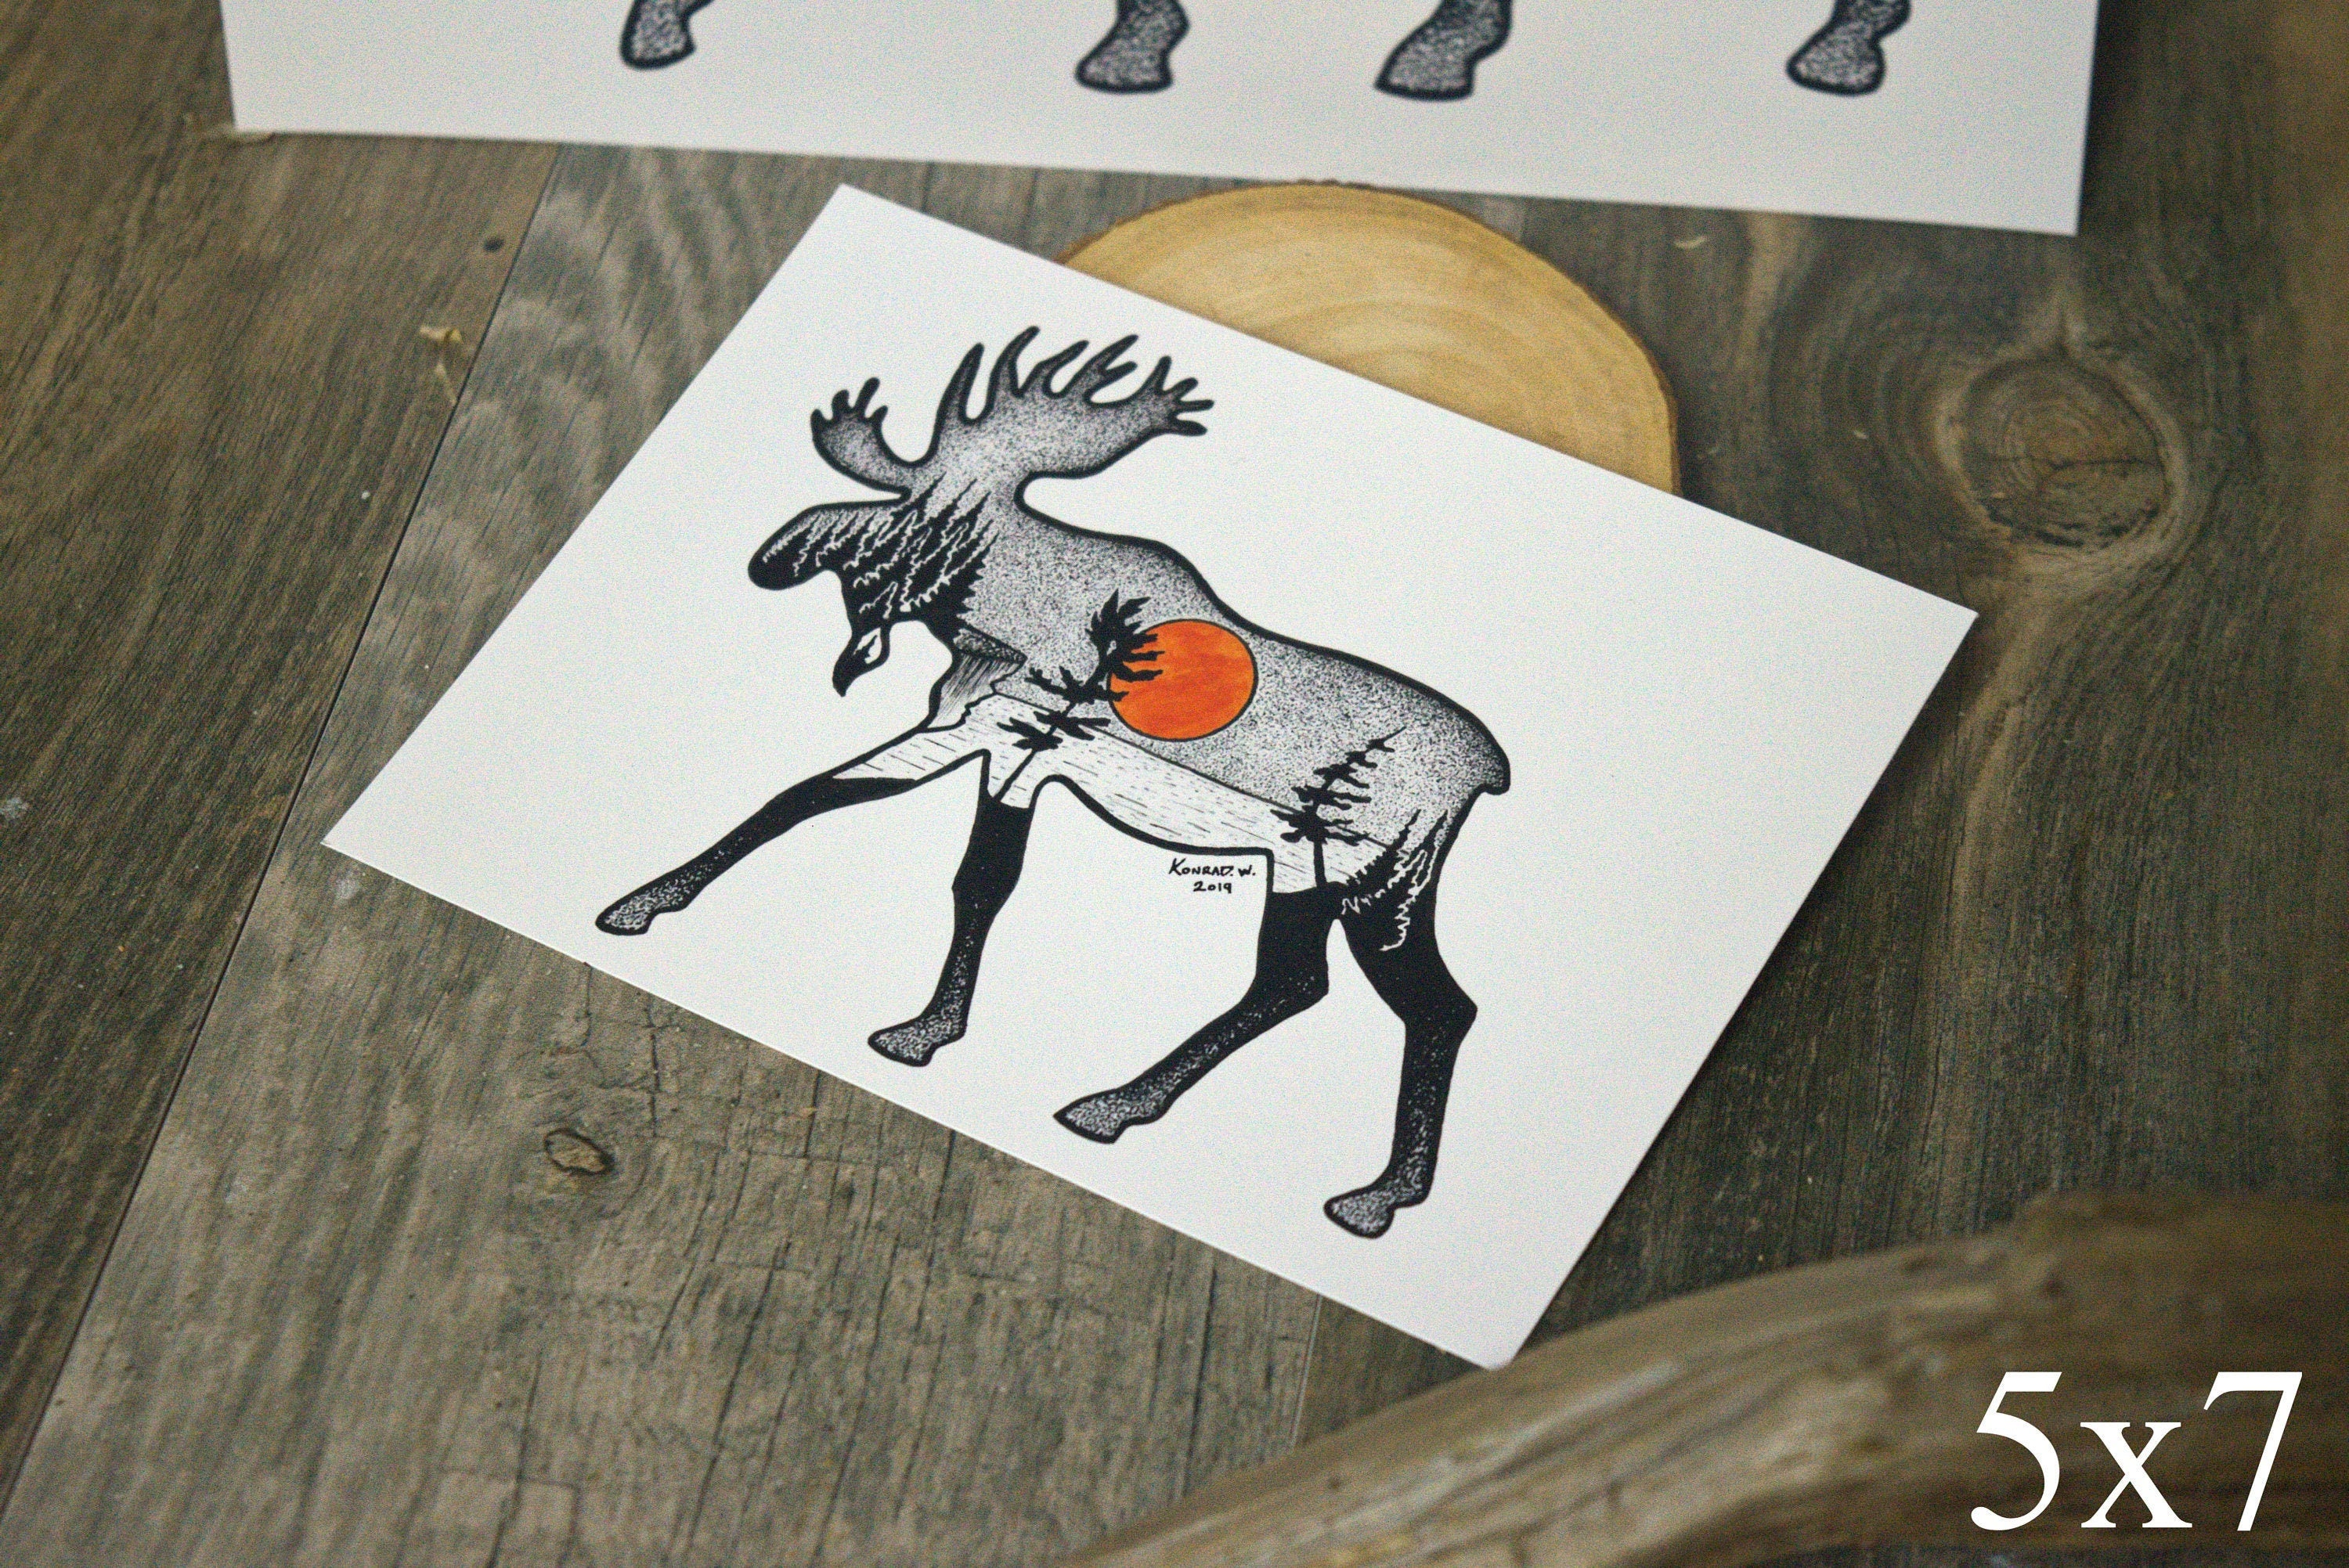 Moose and dog tattoo by sambRRR on DeviantArt